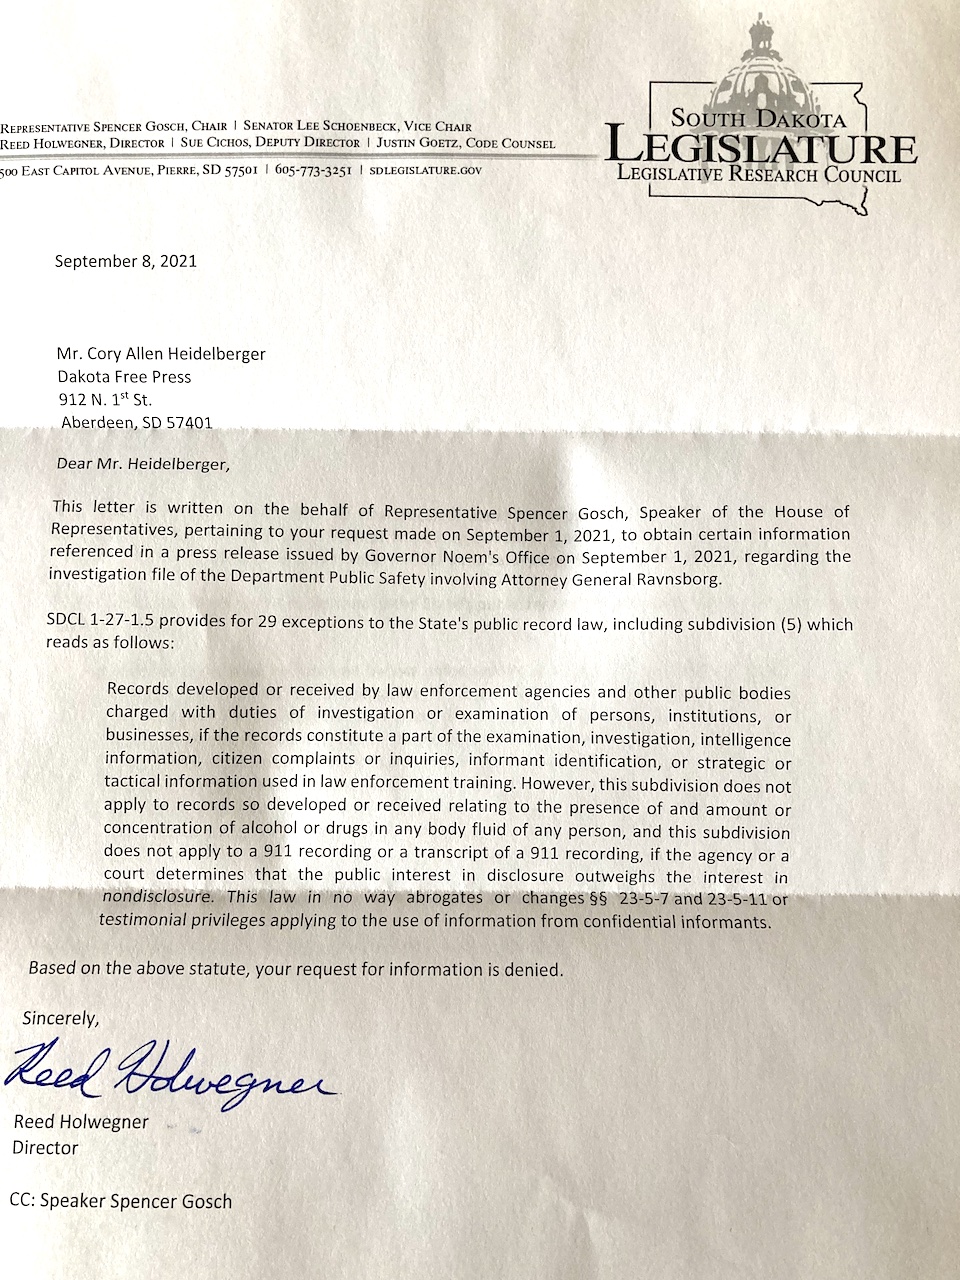 Reed Holwegner, director, Legislative Research Council, letter to CA Heidelberger/Dakota Free Press, 2021.09.08, received 2021.09.10.